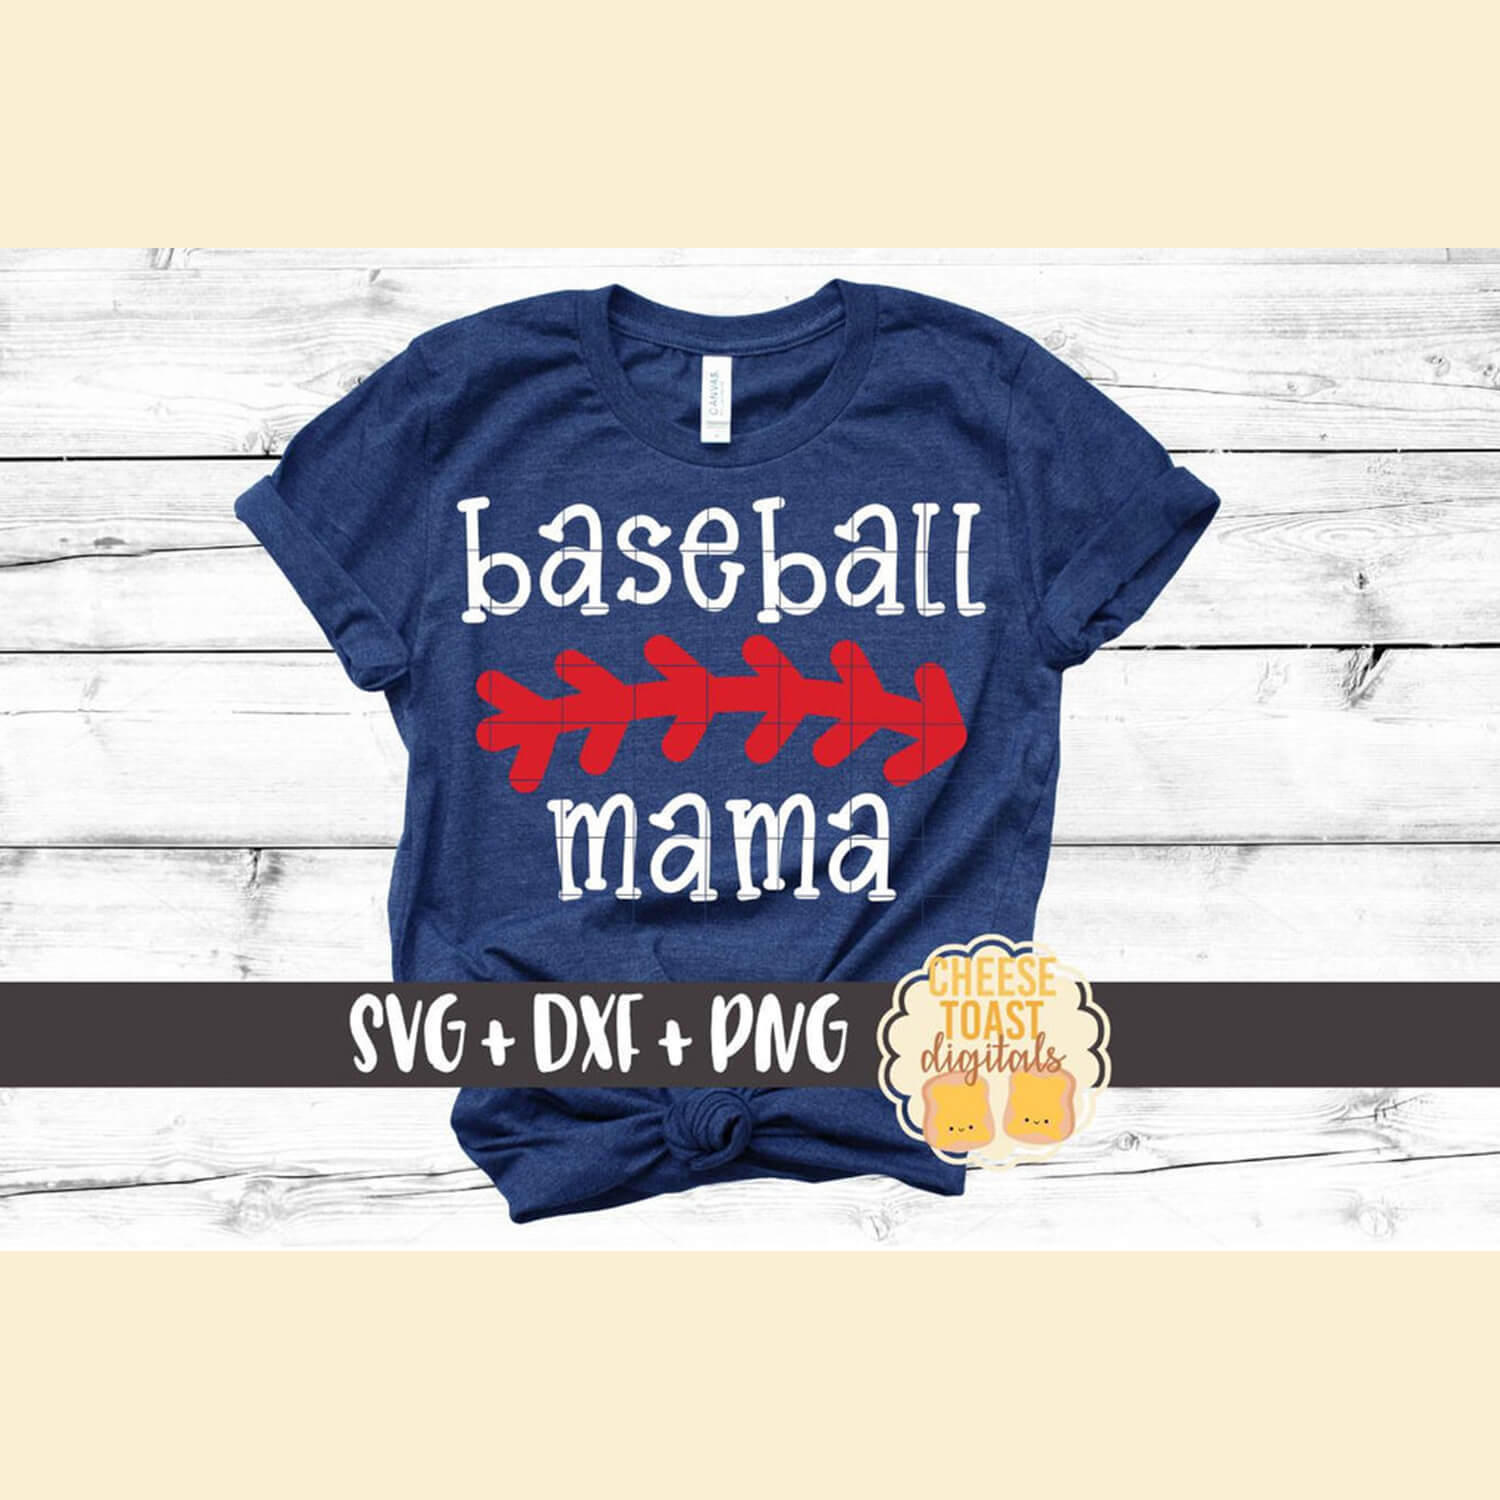 Close-up image of a blue Baseball Mama t-shirt.